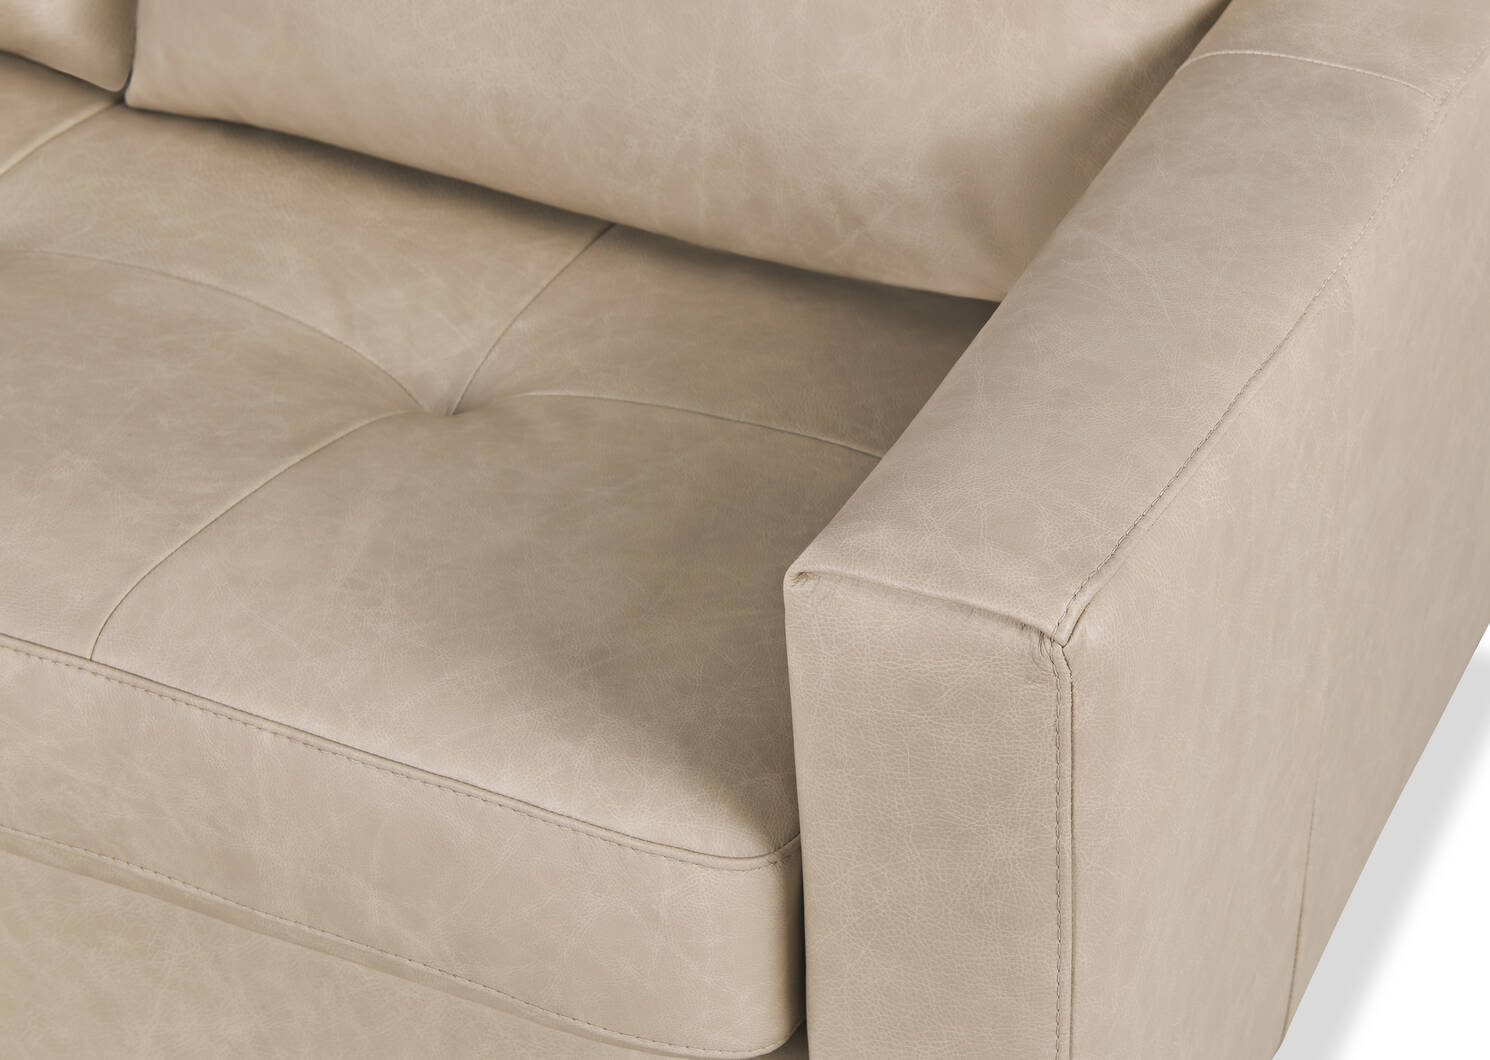 Lucca Custom Leather Sofa